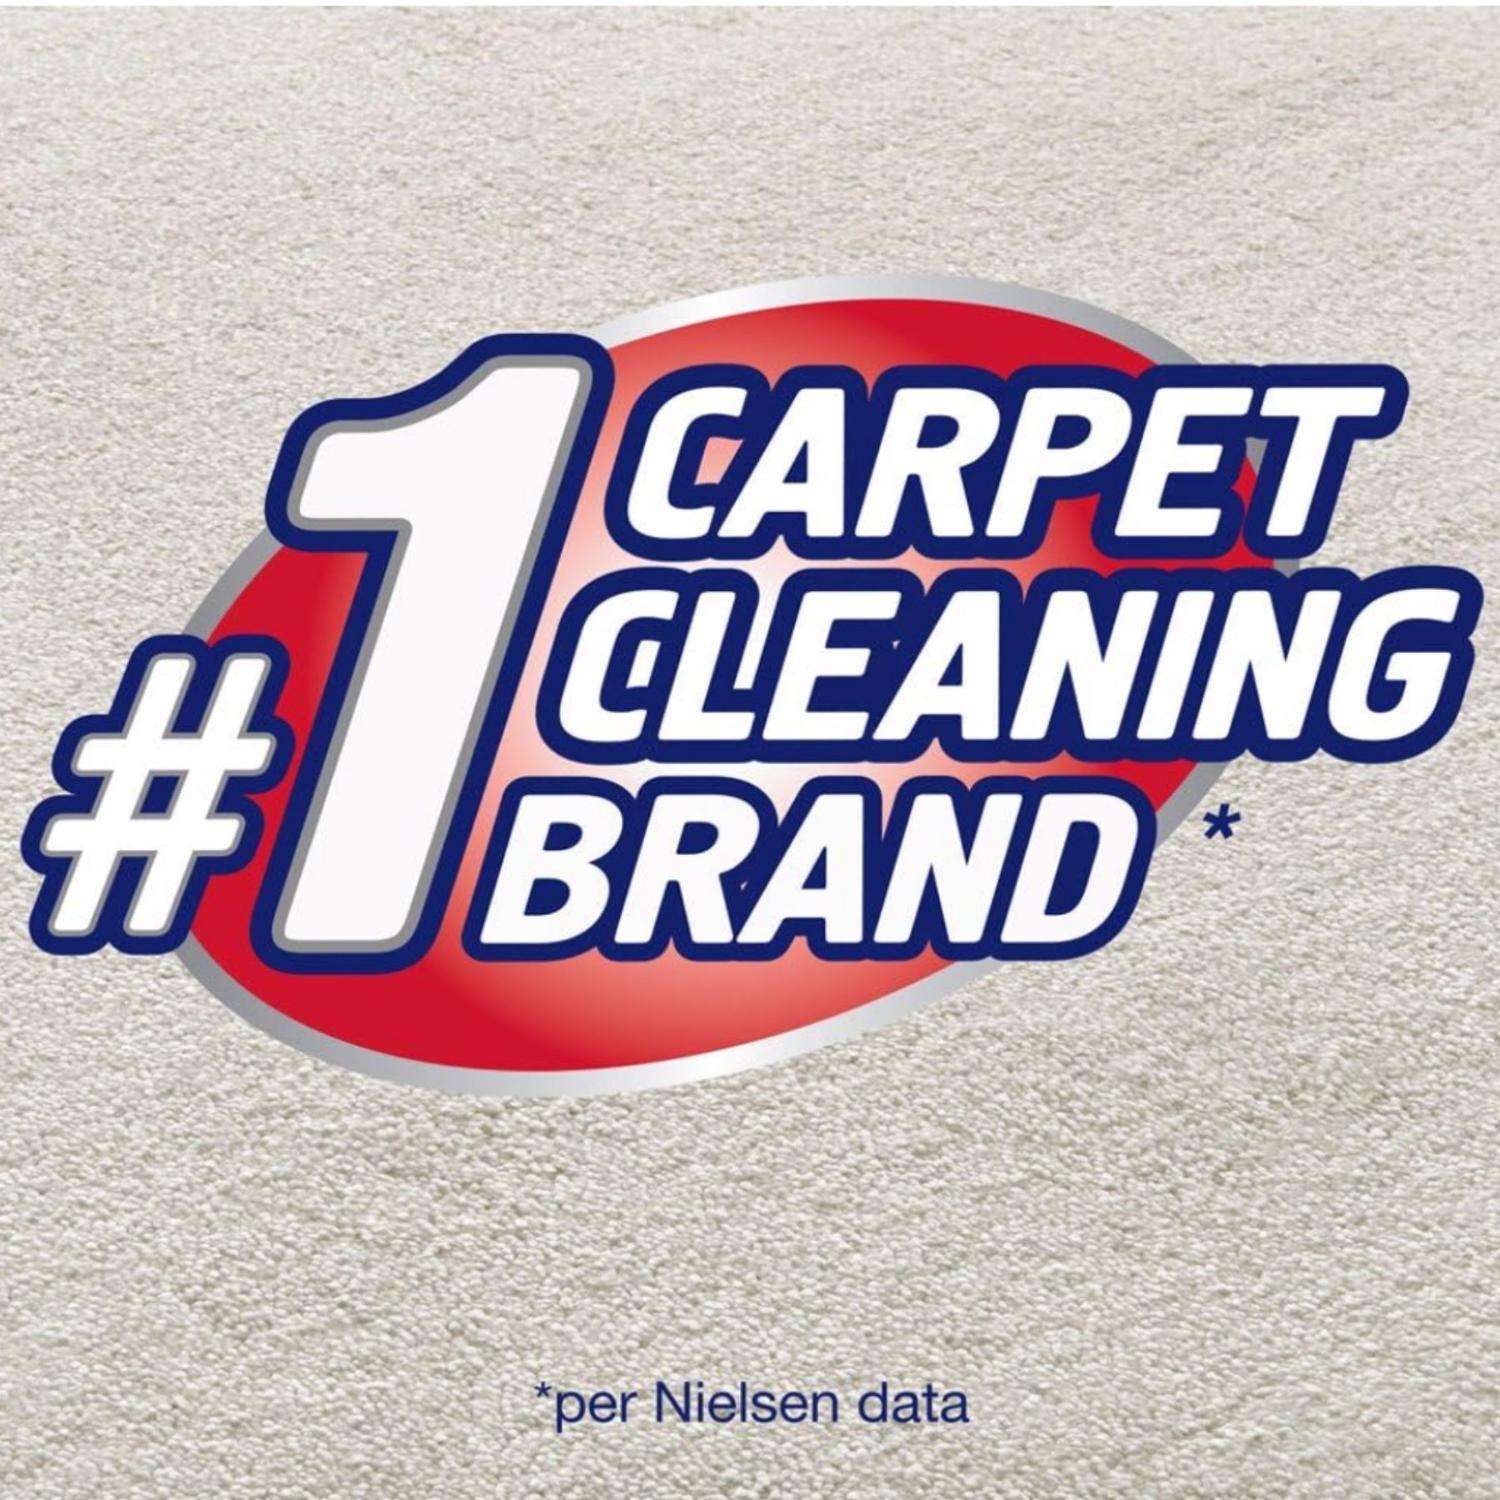 RESOLVE Foam Carpet Cleaner, Foam, 22 oz Aerosol Spray, 12/Carton (00706CT)